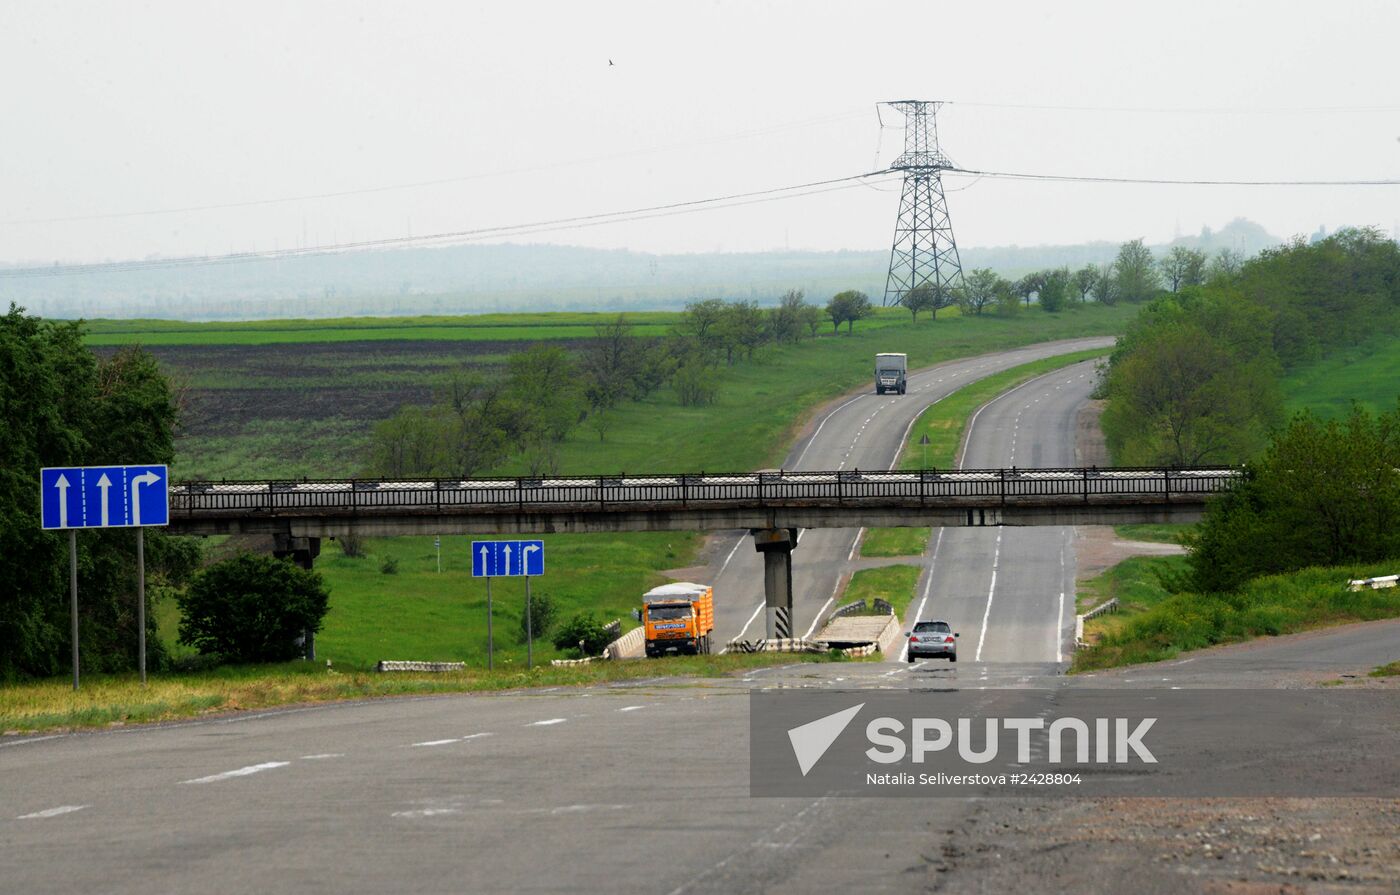 Interchange of bypass road toward Simferopol and Odessa